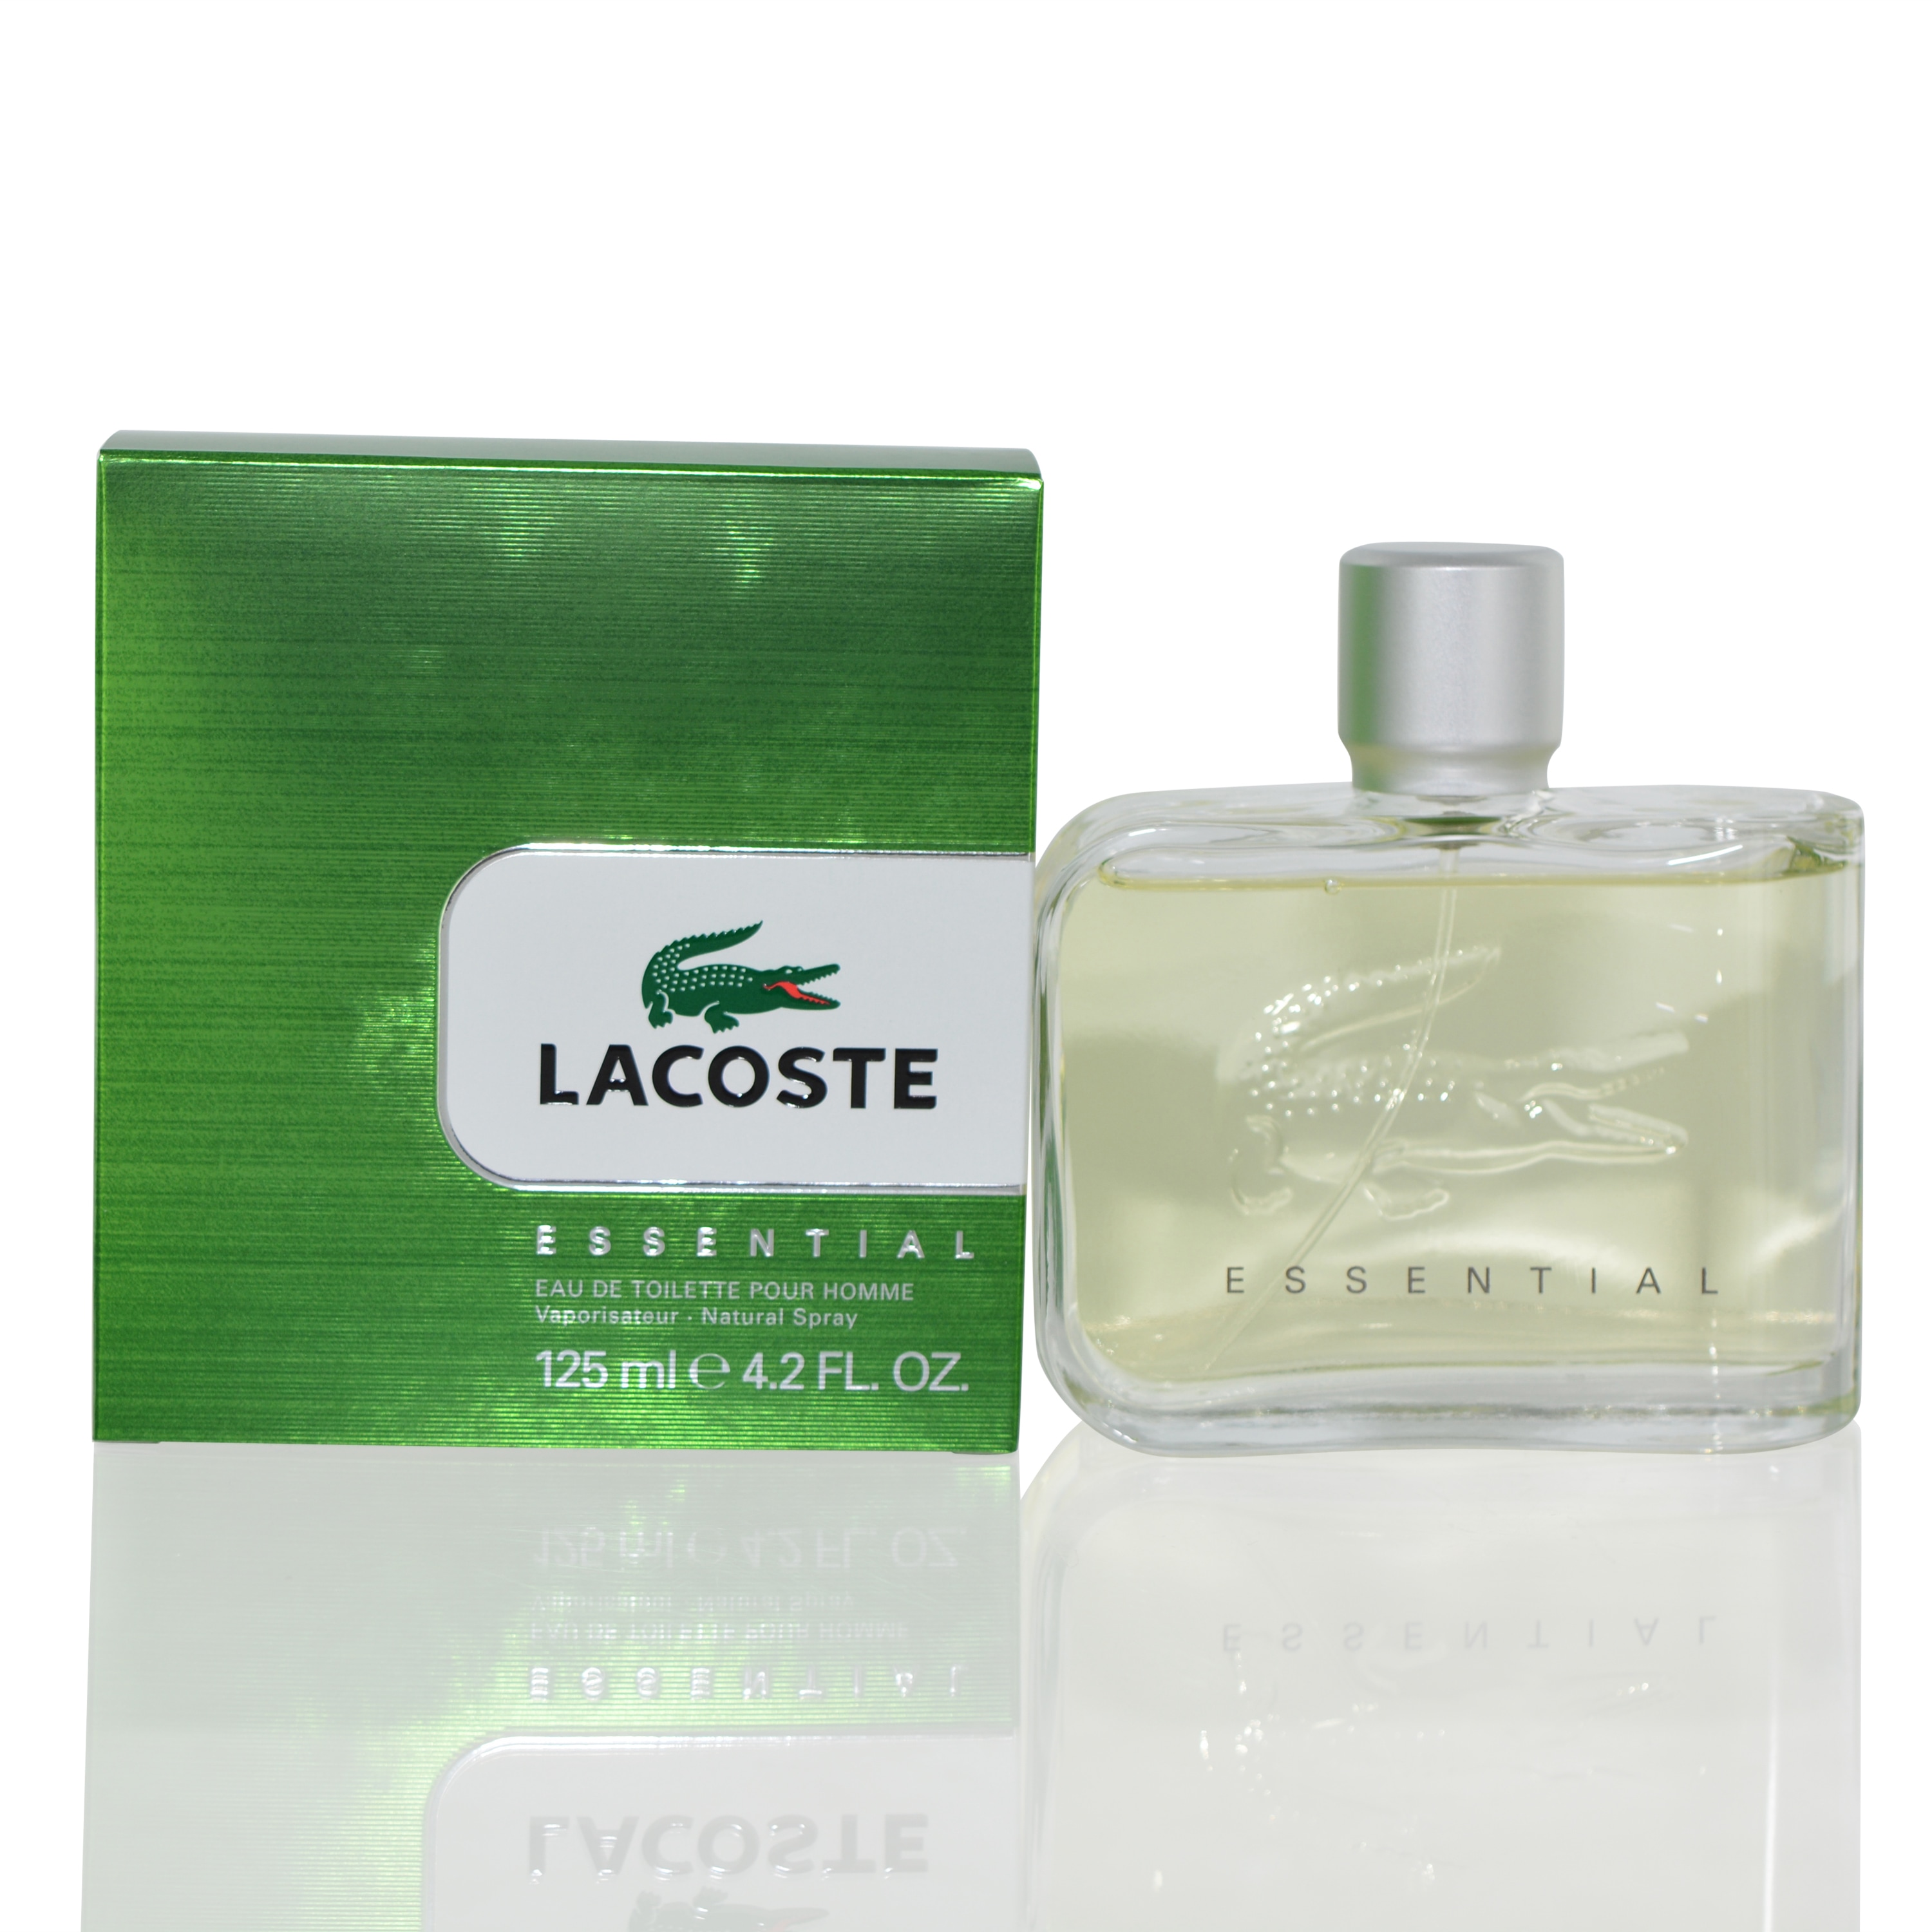 lacoste men's cologne white bottle